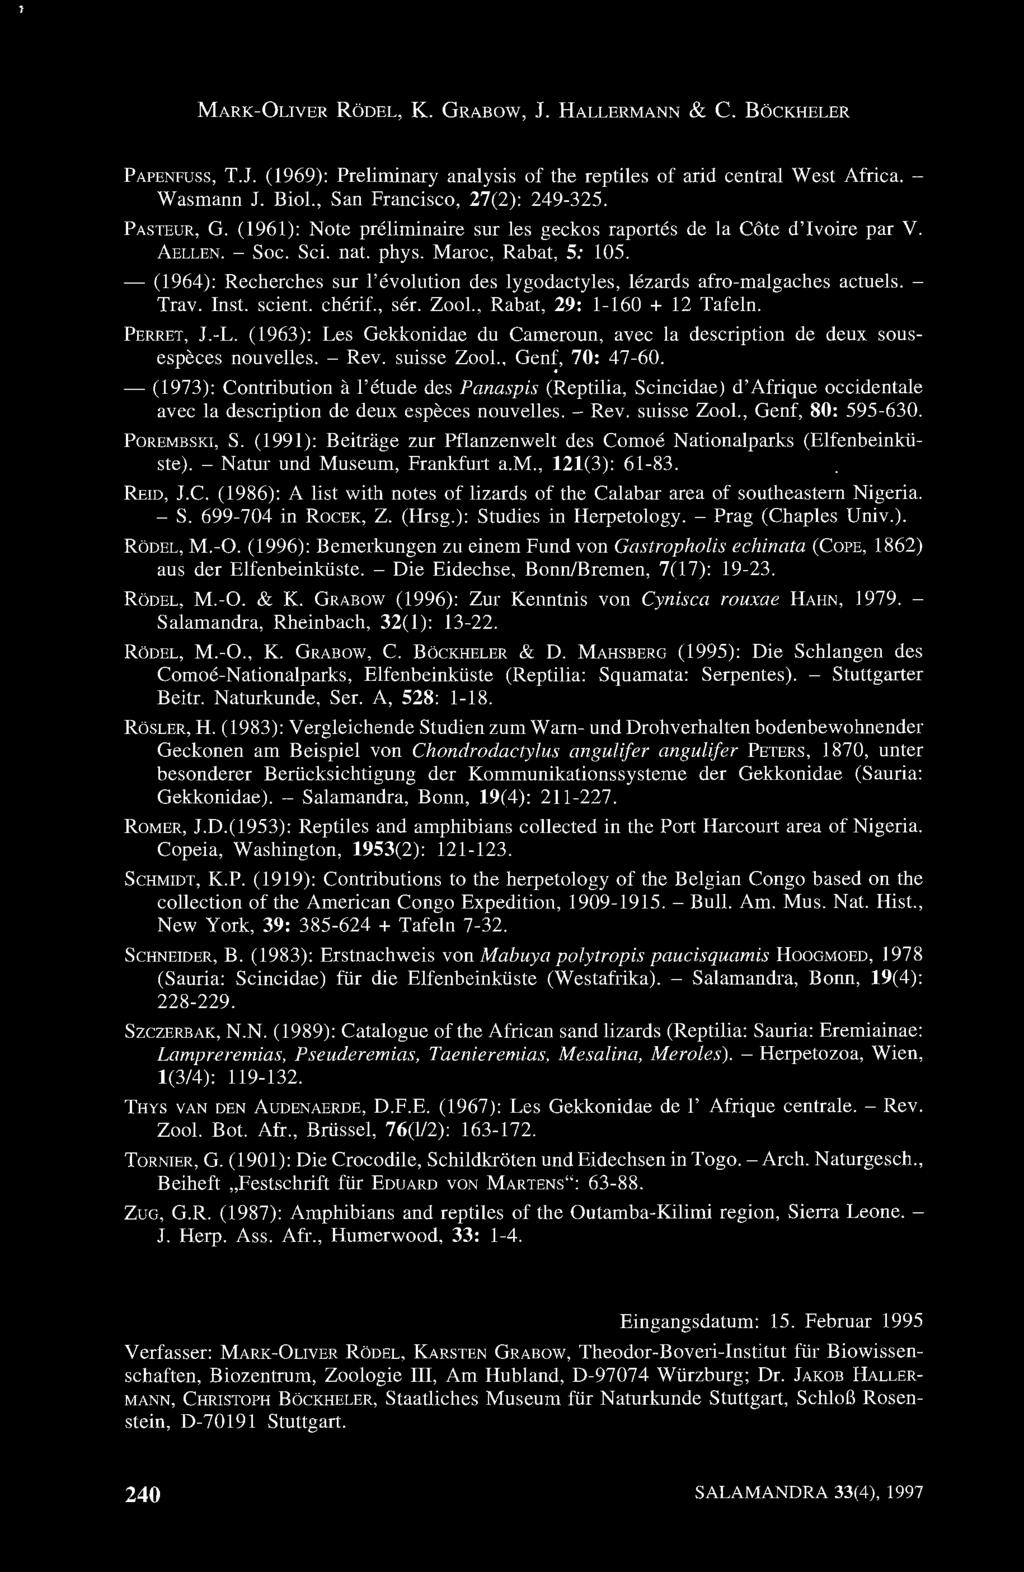 - (1964): Recherches sur l' evolution des lygodactyles, lezards afro-malgaches actuels. - Trav. Inst. scient. cherif., ser. Zoo!., Rabat, 29: 1-160 + 12 Tafeln. PERRET, J.-L.